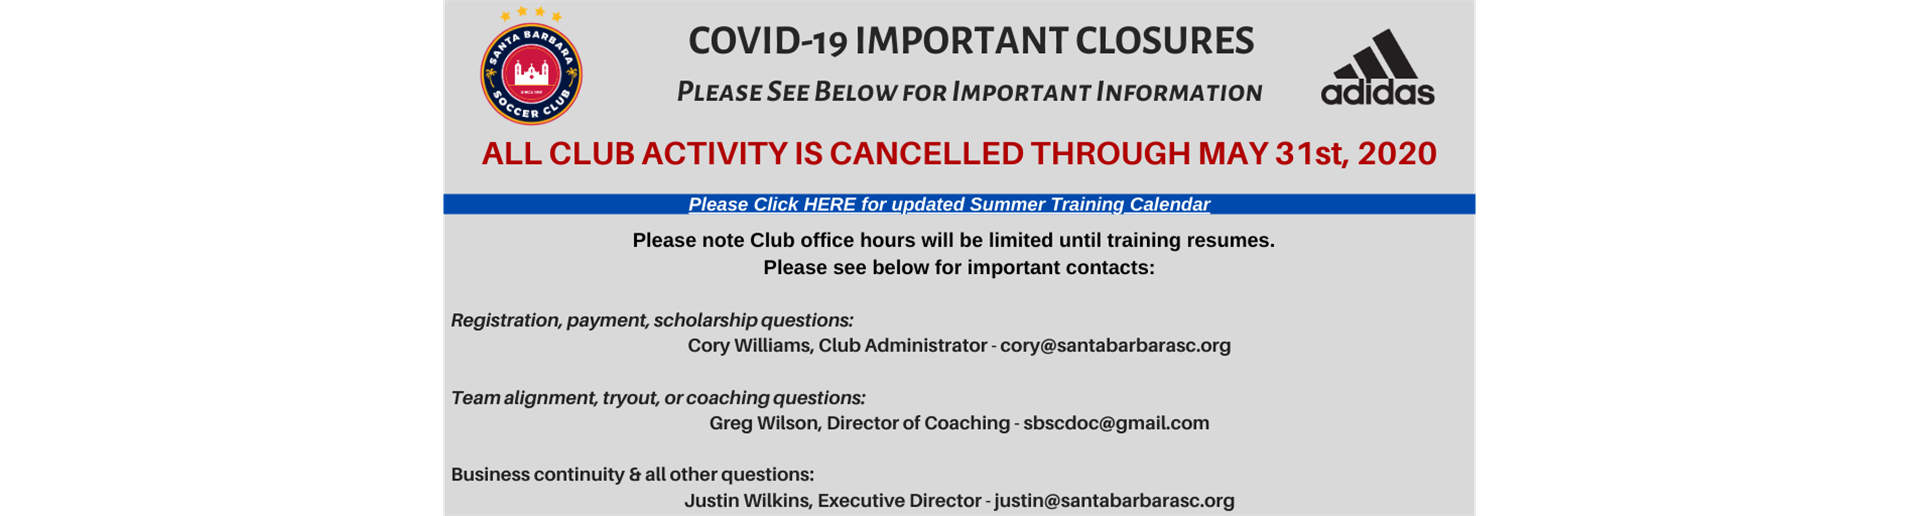 Club Closure - COVID-19